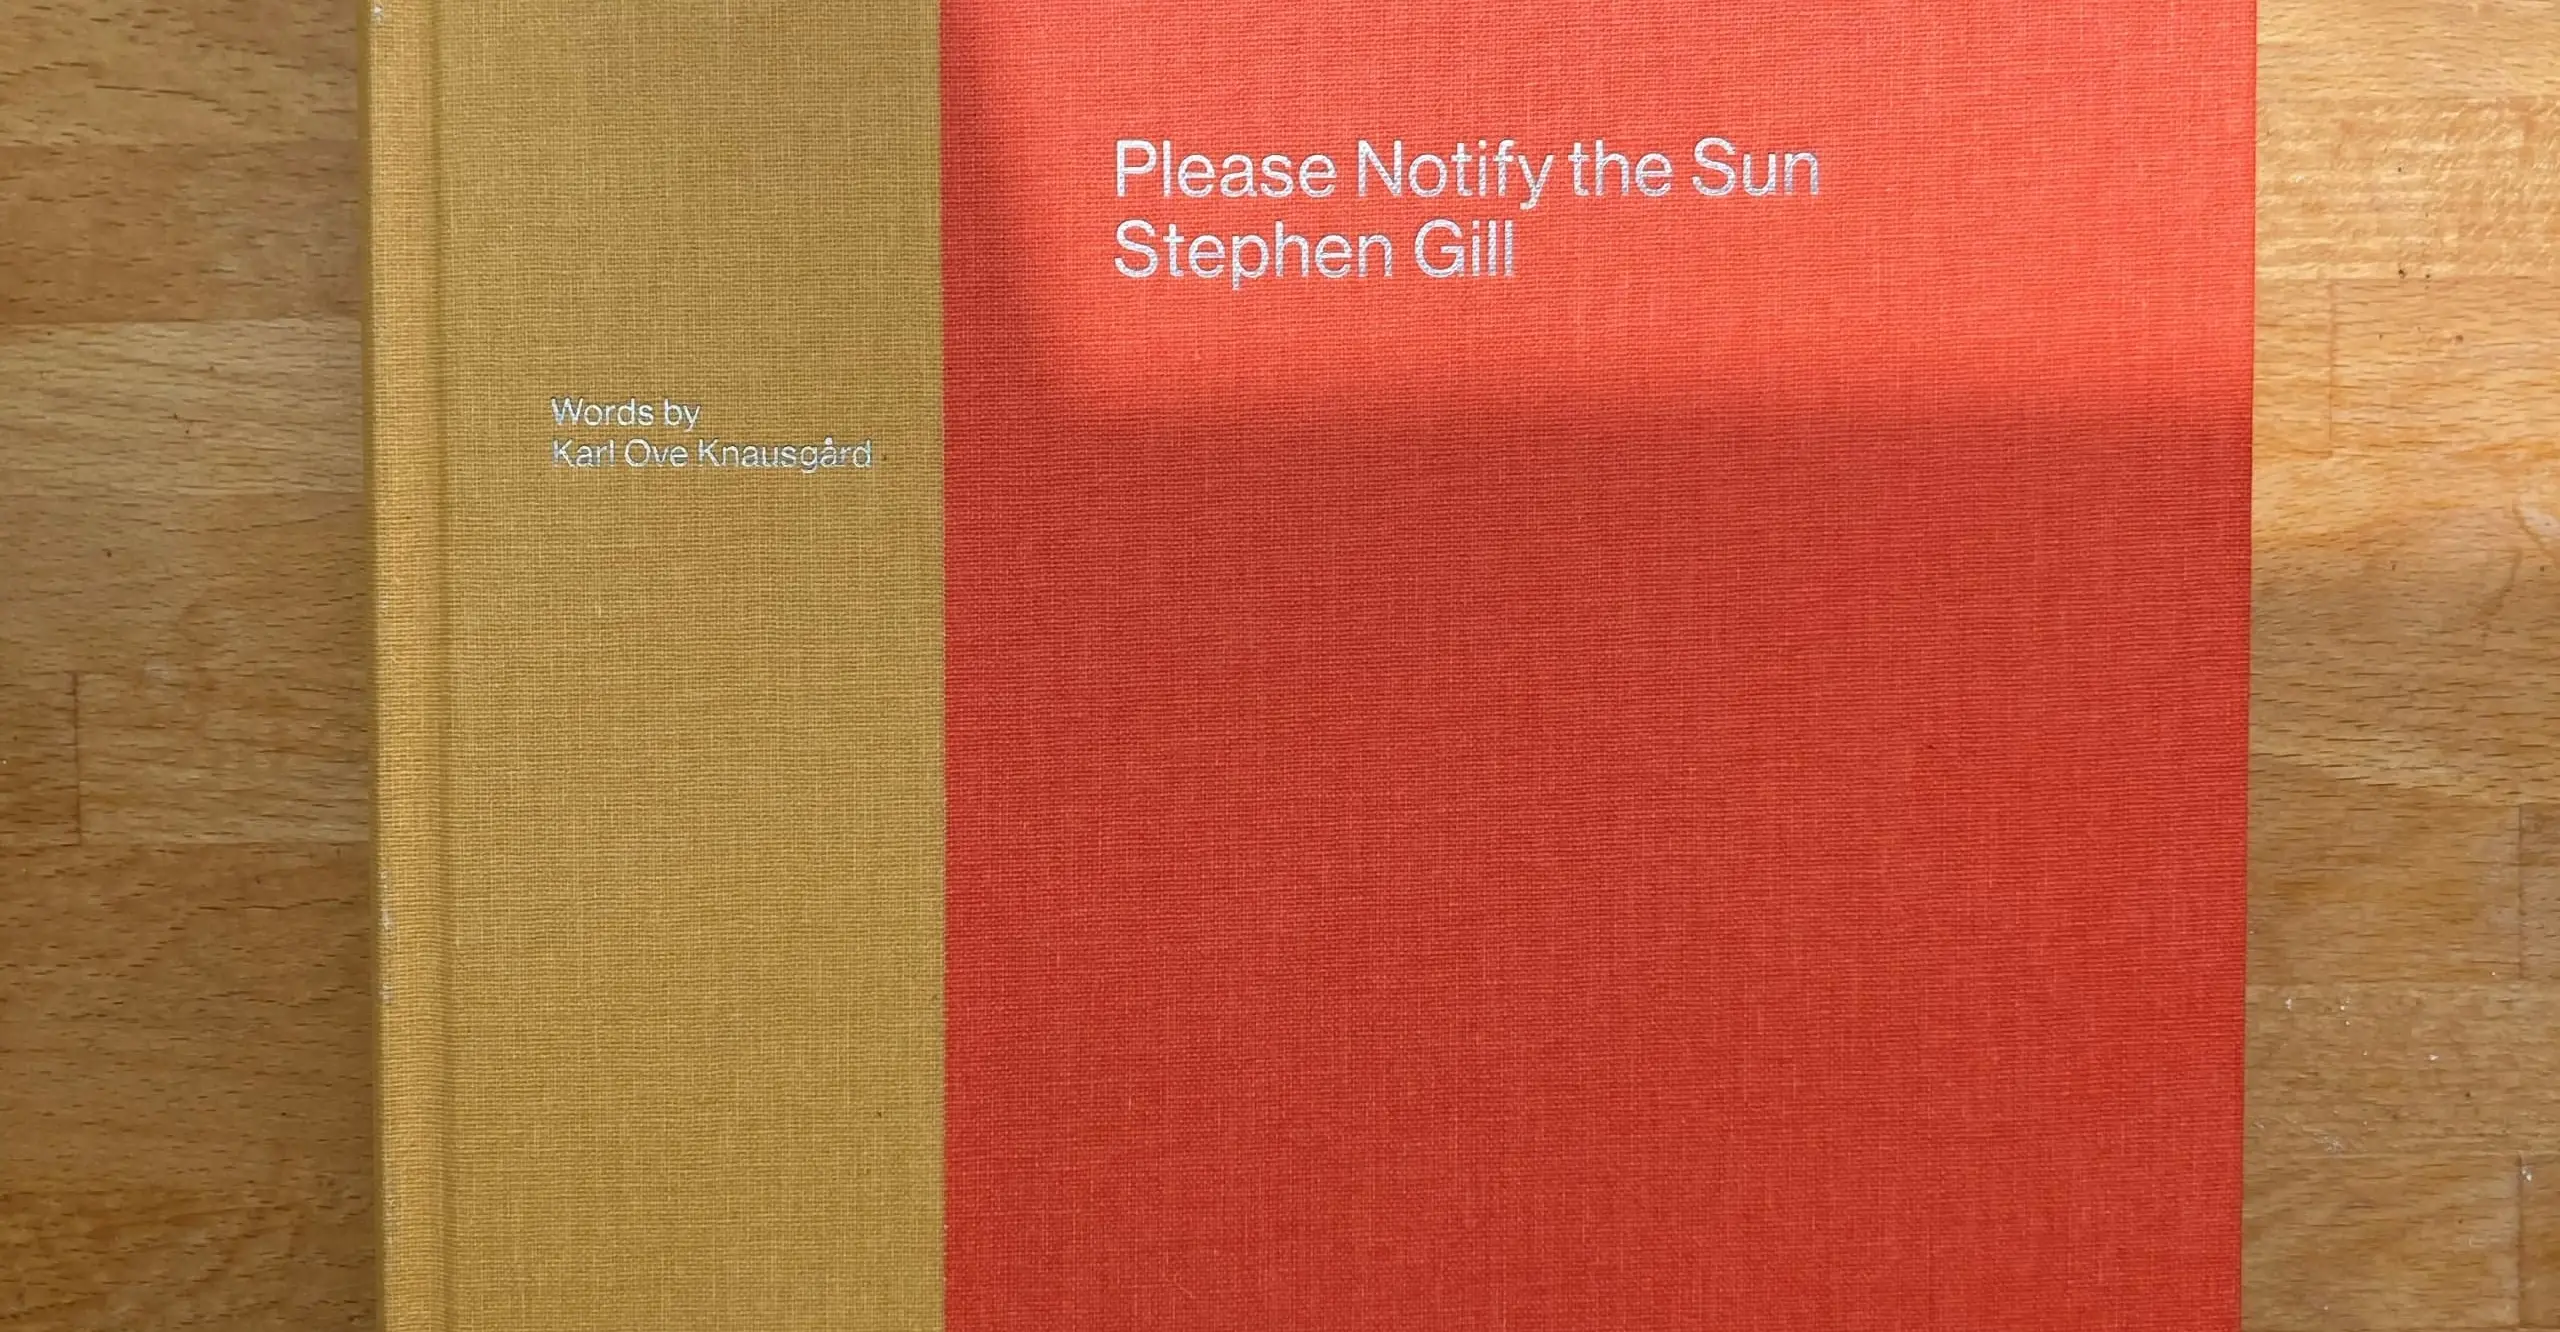 Book cover, fabric bound hardback. Beige/Orange spine, reddish orange cover. Reads "Please Notify the Sun, Stephen Gill."